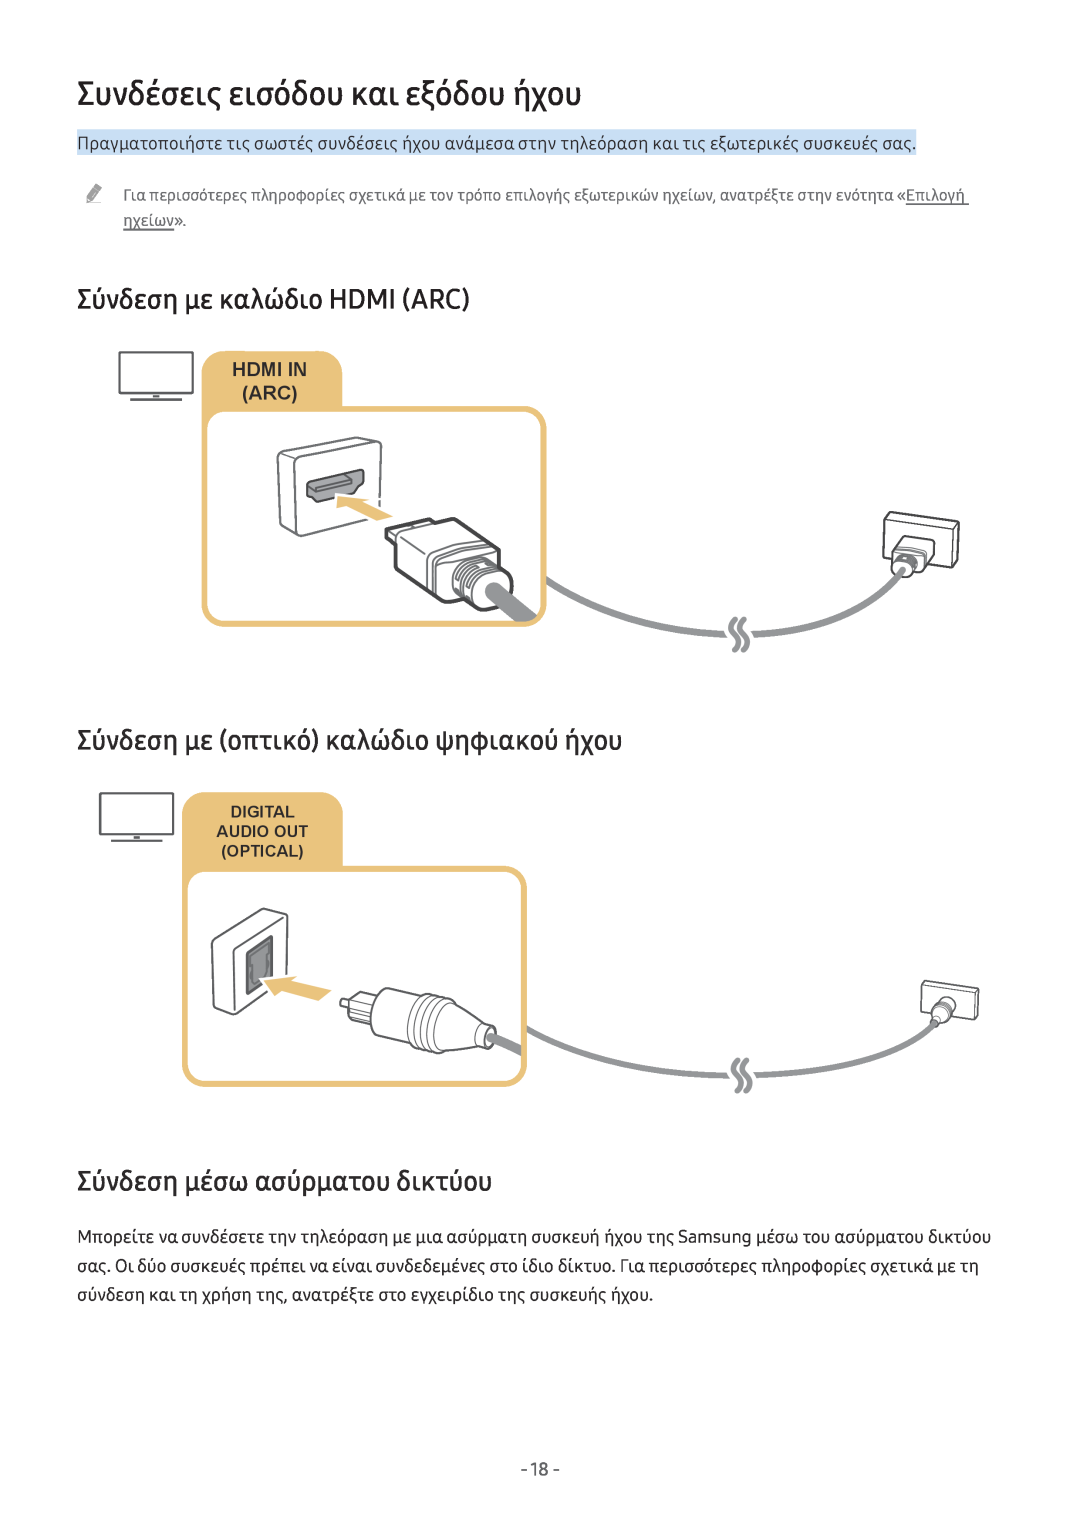 Samsung UE49M6302AKXXH Συνδέσεις εισόδου και εξόδου ήχου, Σύνδεση με καλώδιο HDMI ARC, Σύνδεση μέσω ασύρματου δικτύου 